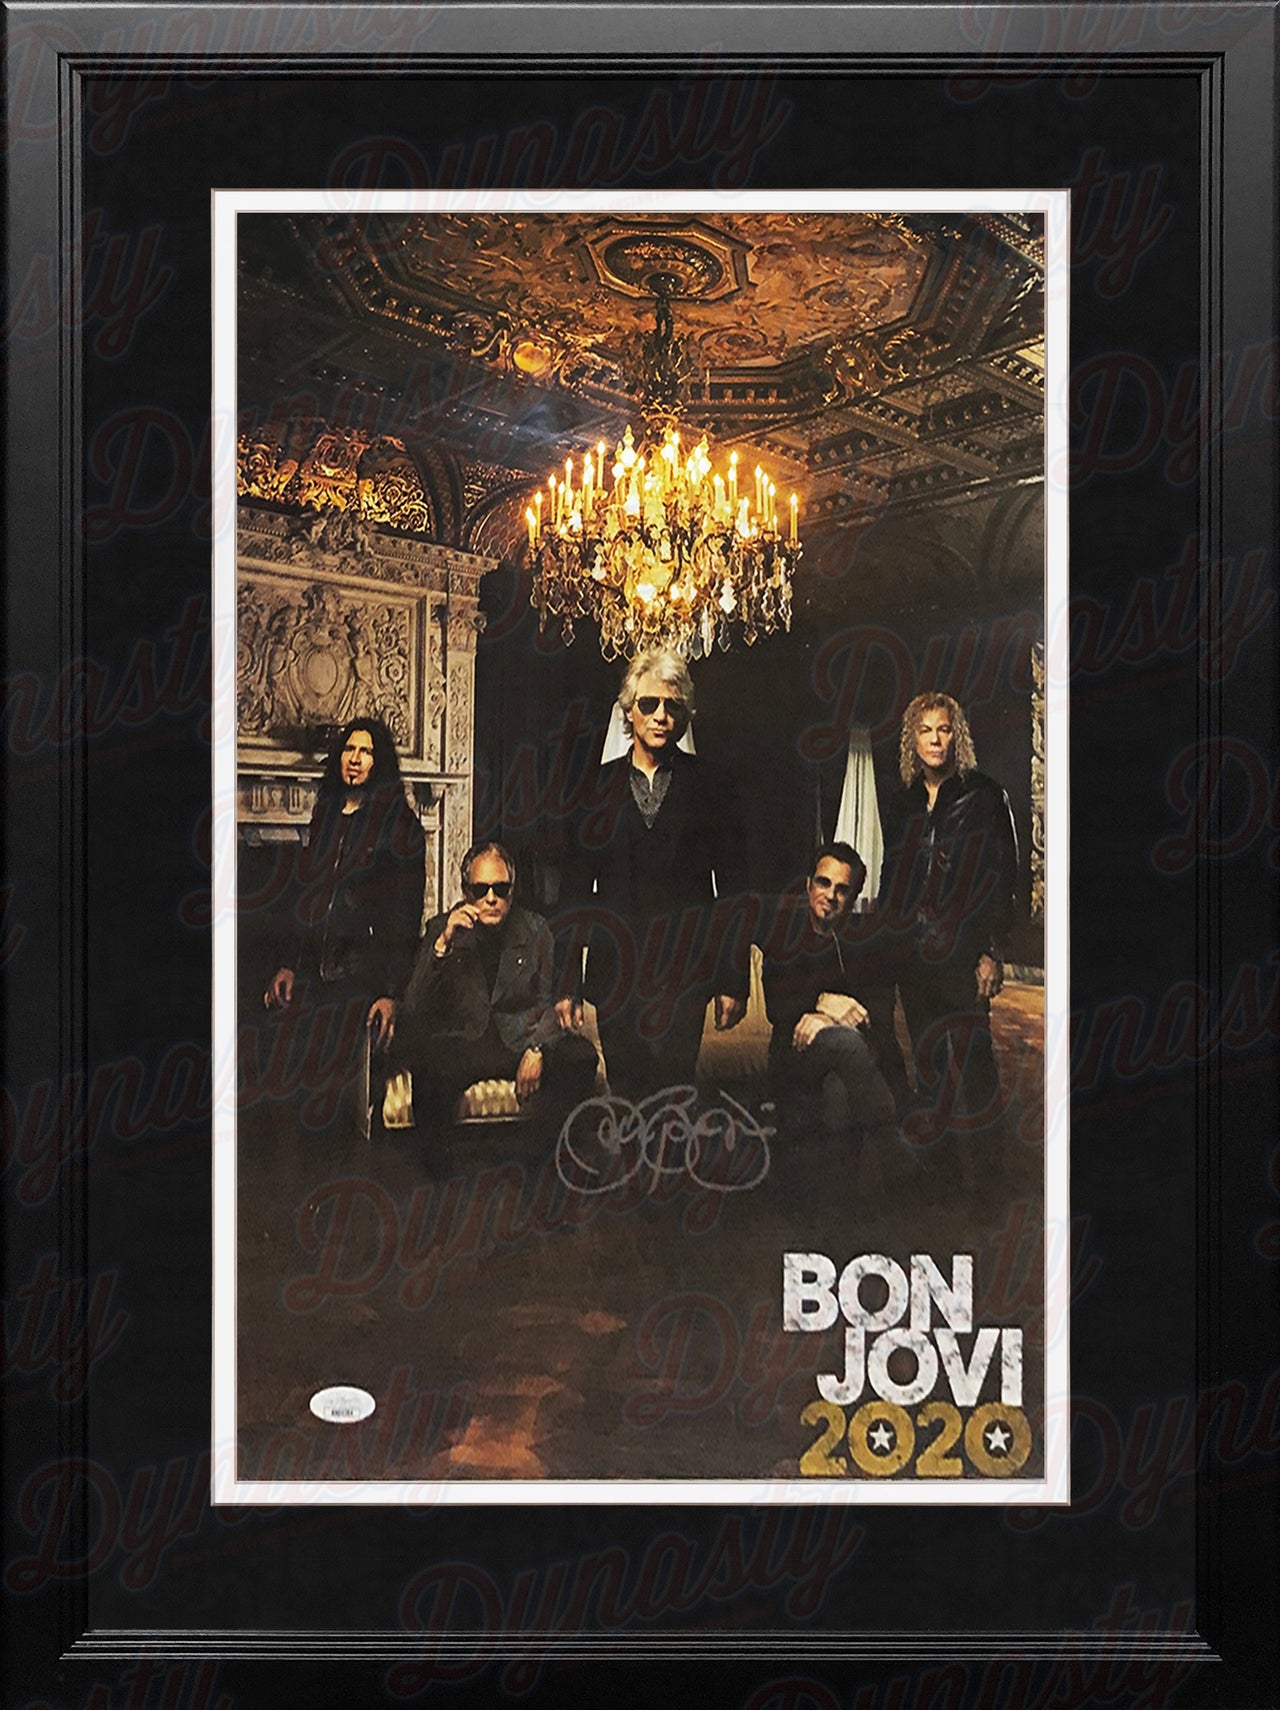 Bon Jovi Autographed On a Night Like This 2020 12" x 18" Framed Photo - Dynasty Sports & Framing 